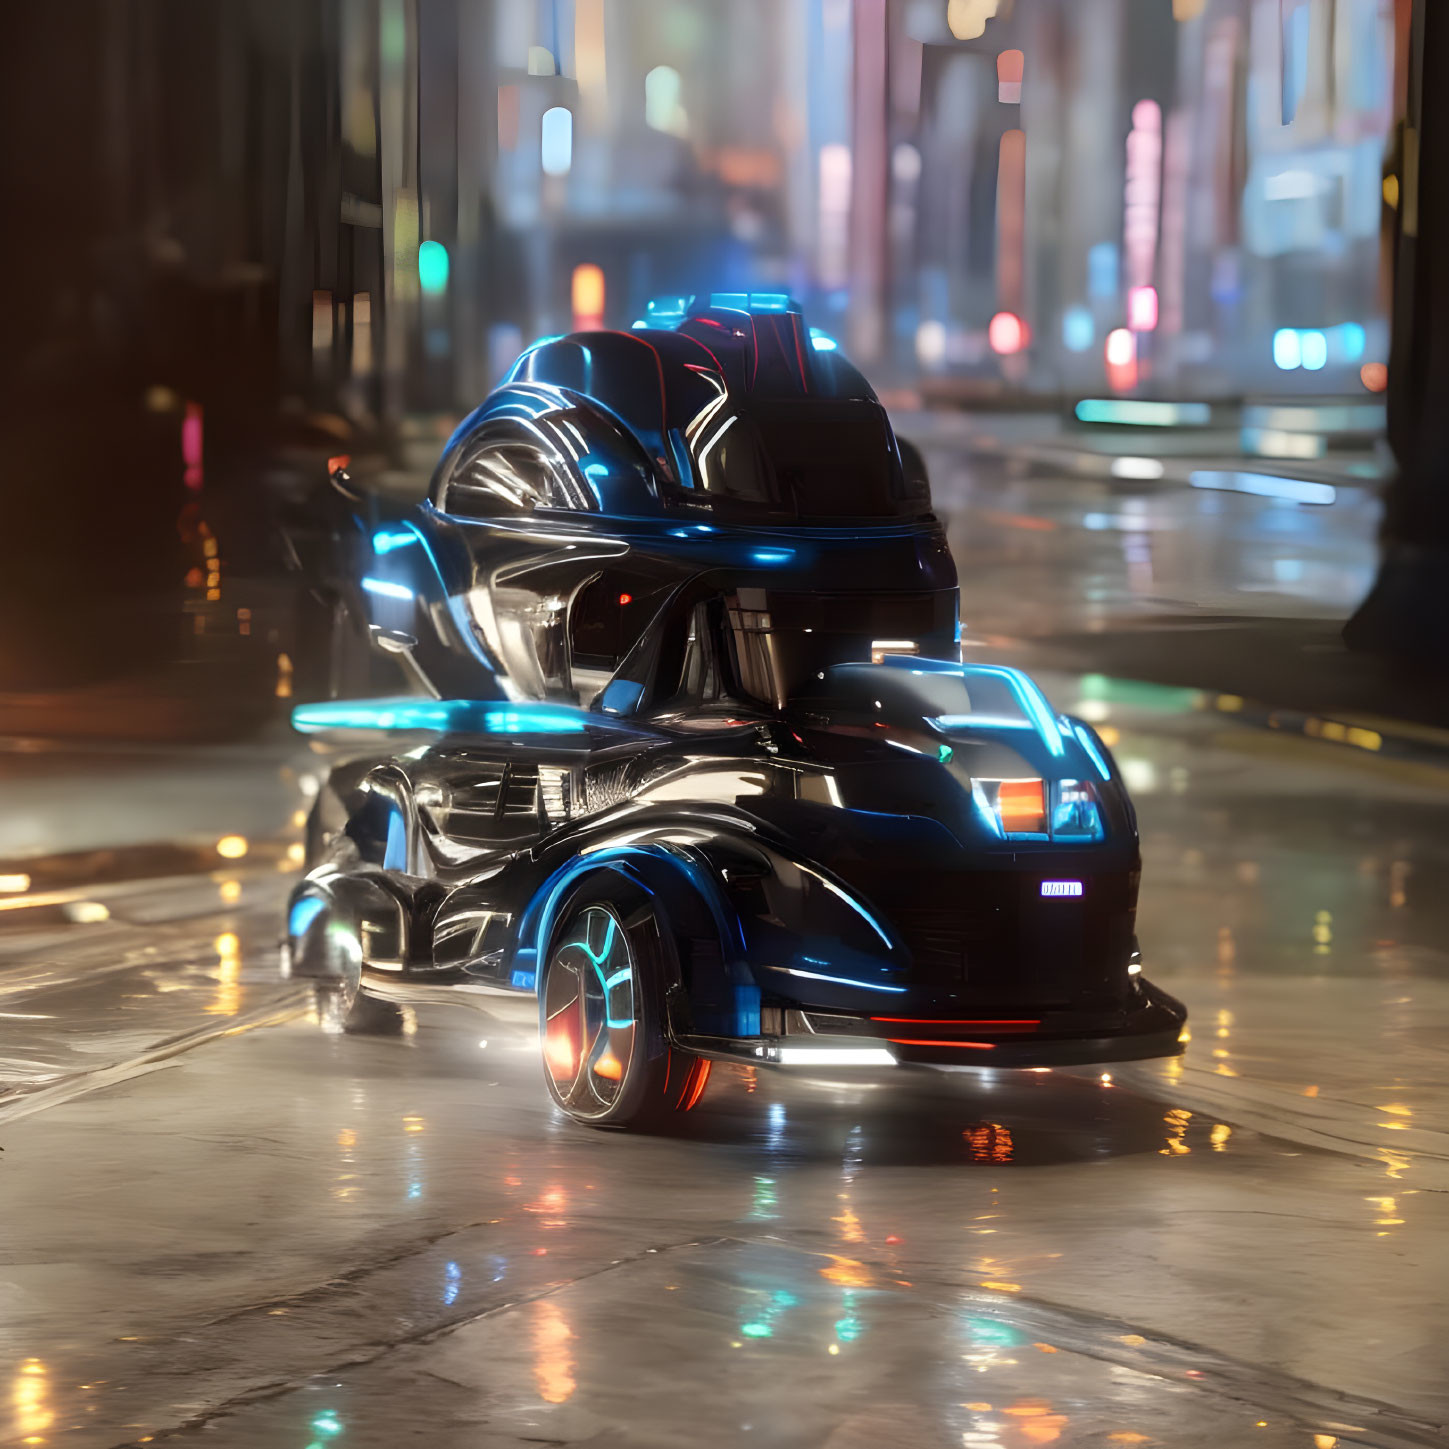 Futuristic black car with blue neon lights in urban night scene